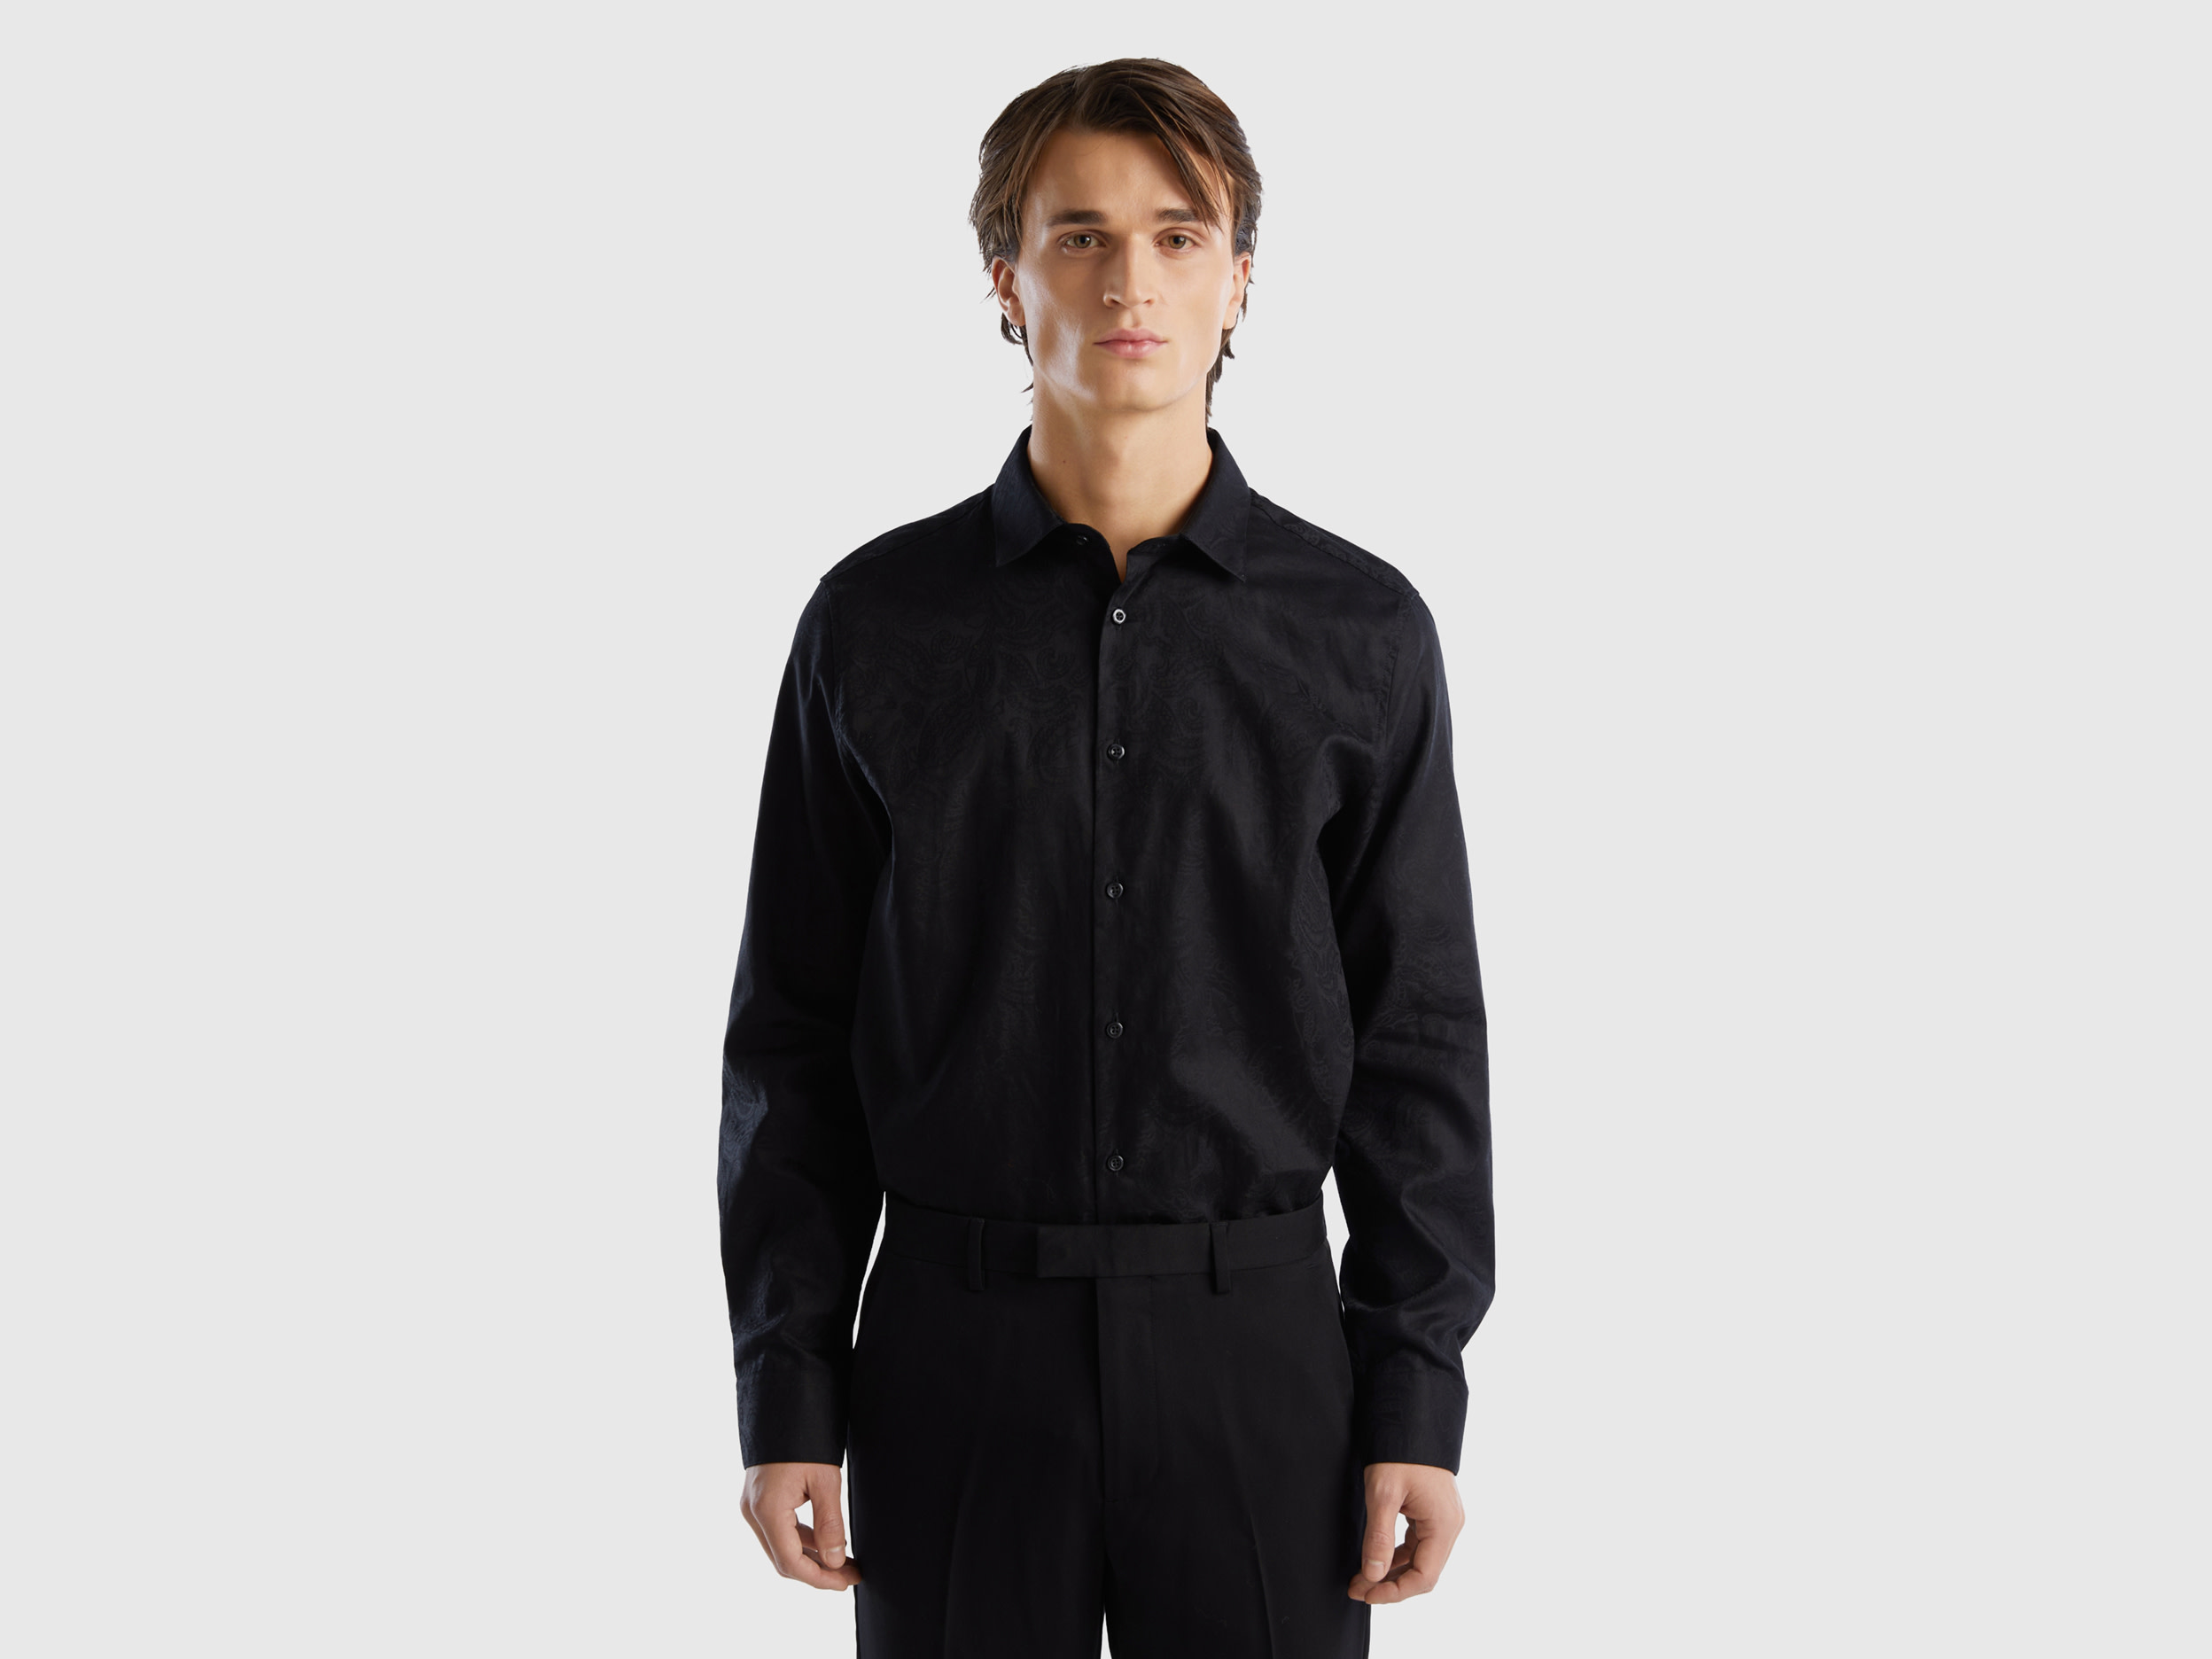 Benetton, Shirt With Jacquard Pattern, size XXXL, Black, Men